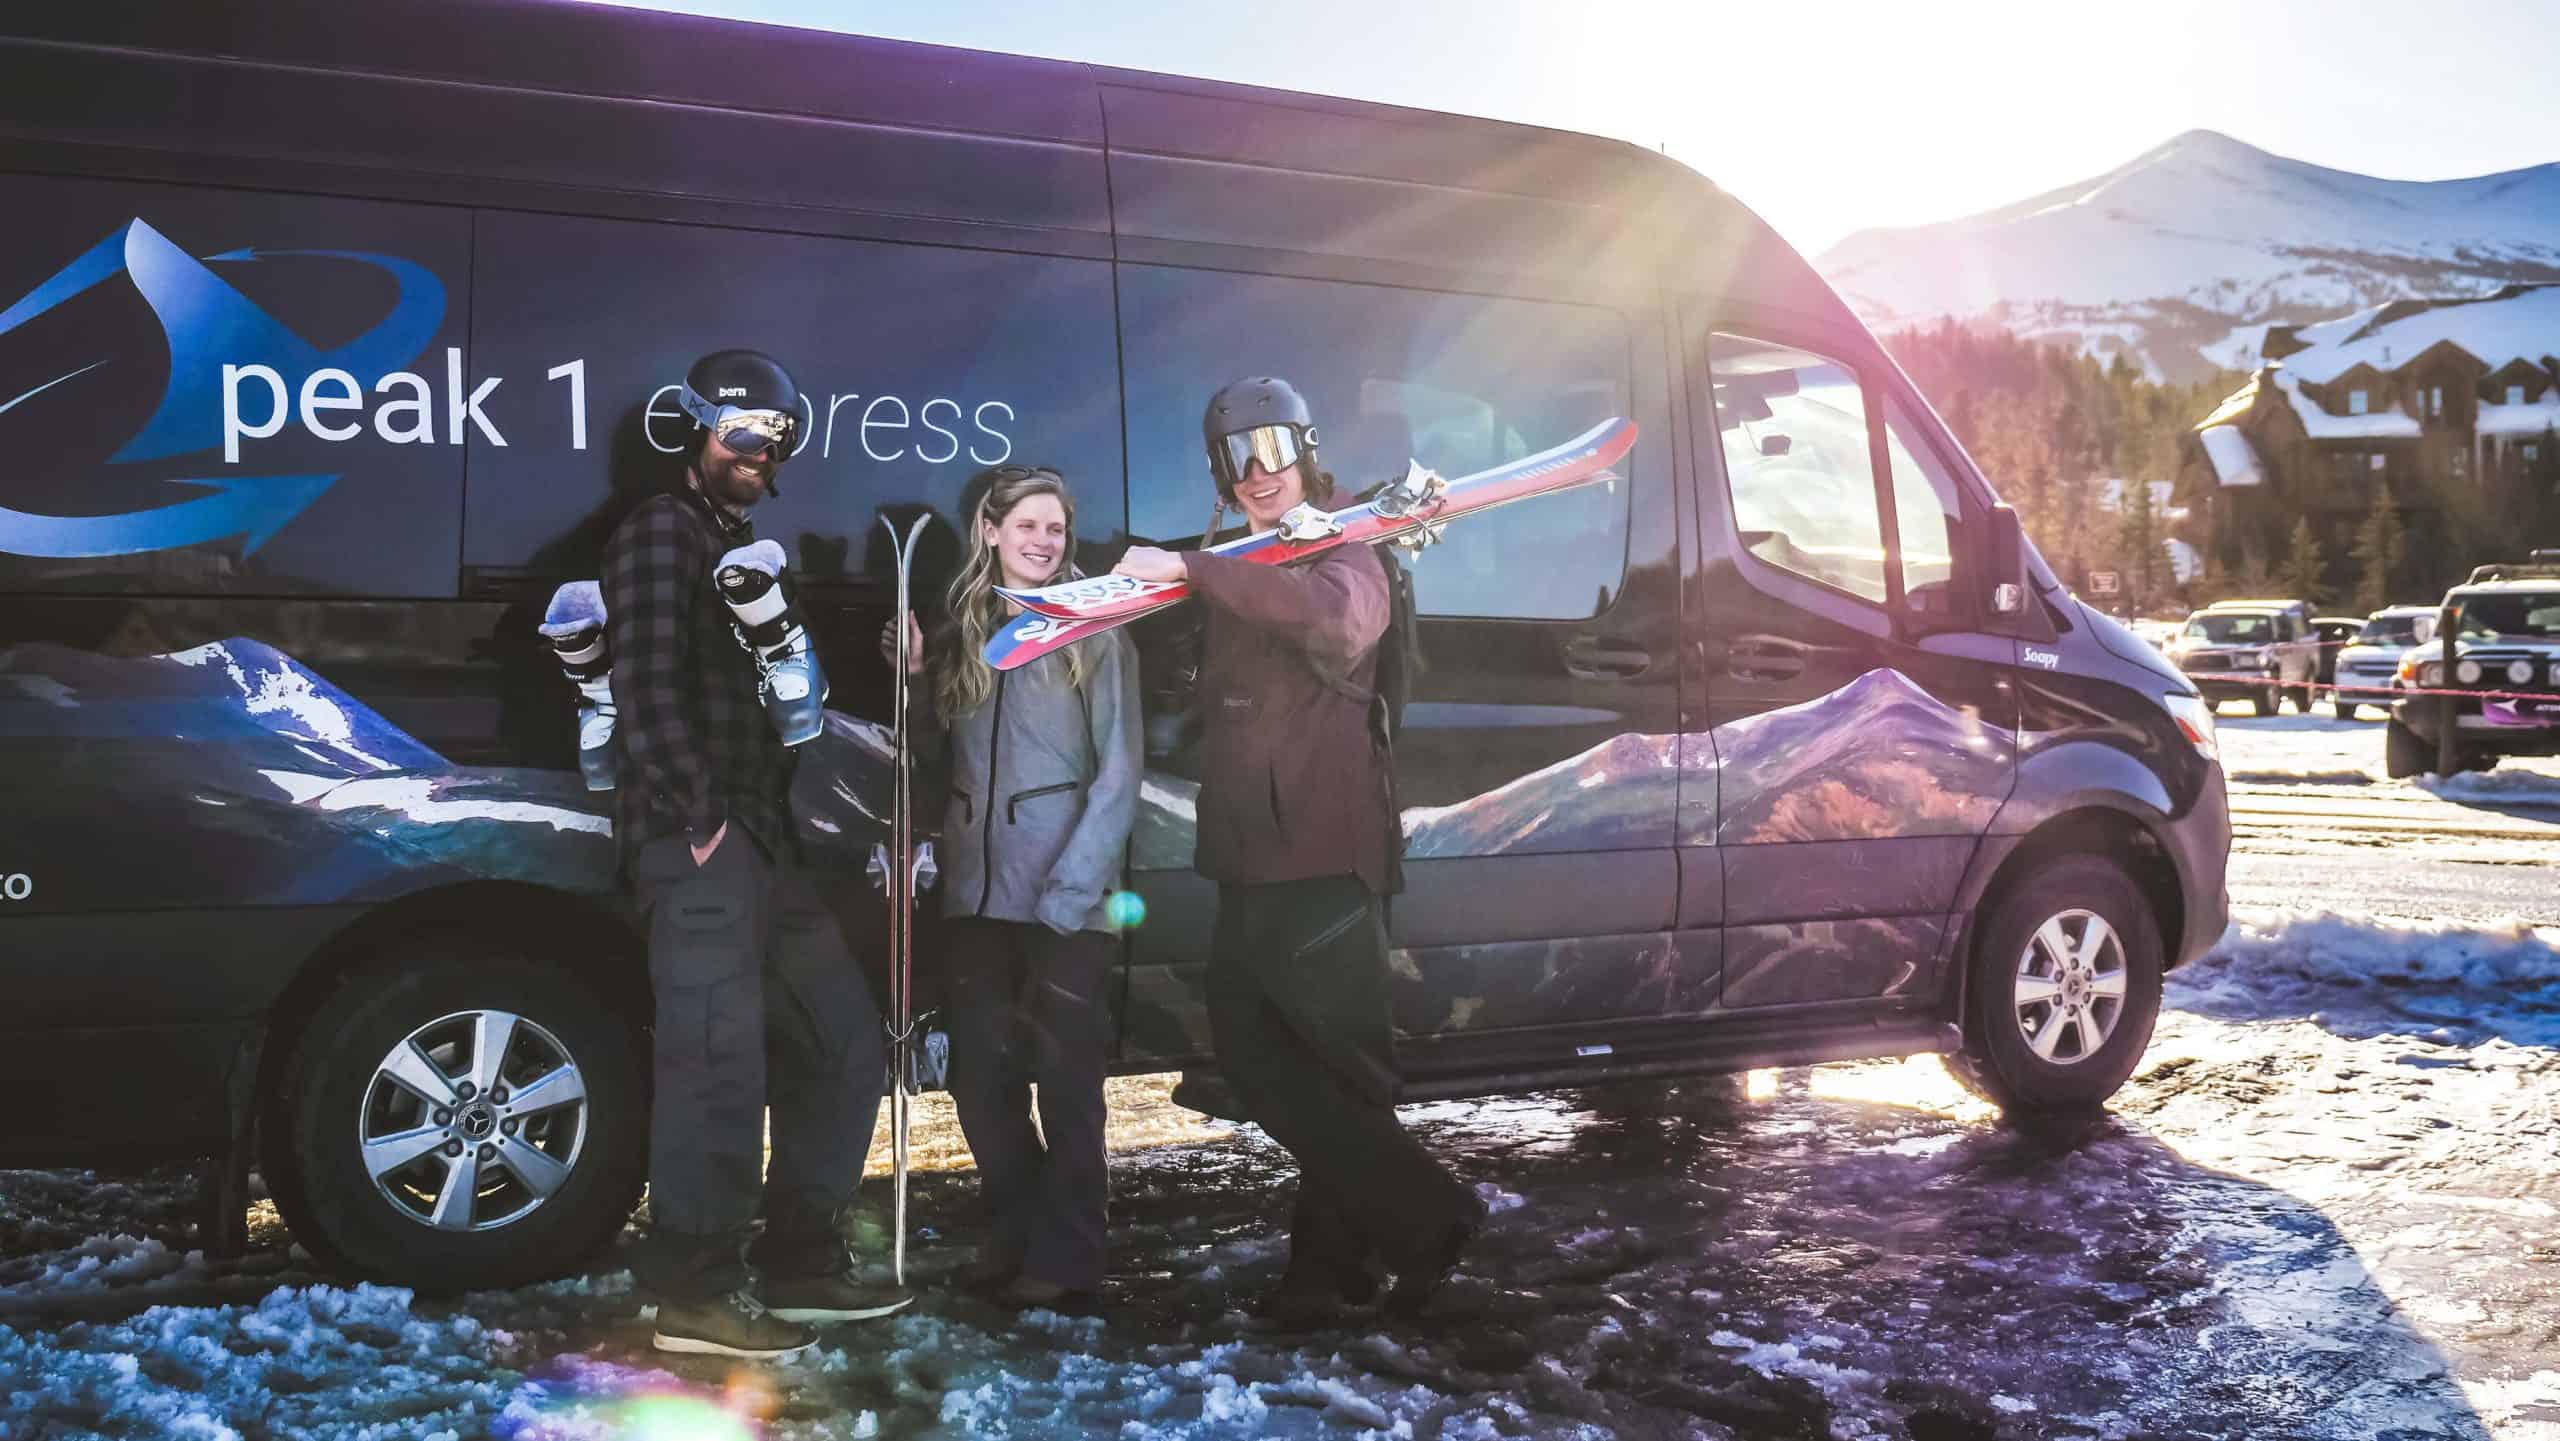 Friends standing beside a peak 1 express van in a ski resort parking lot